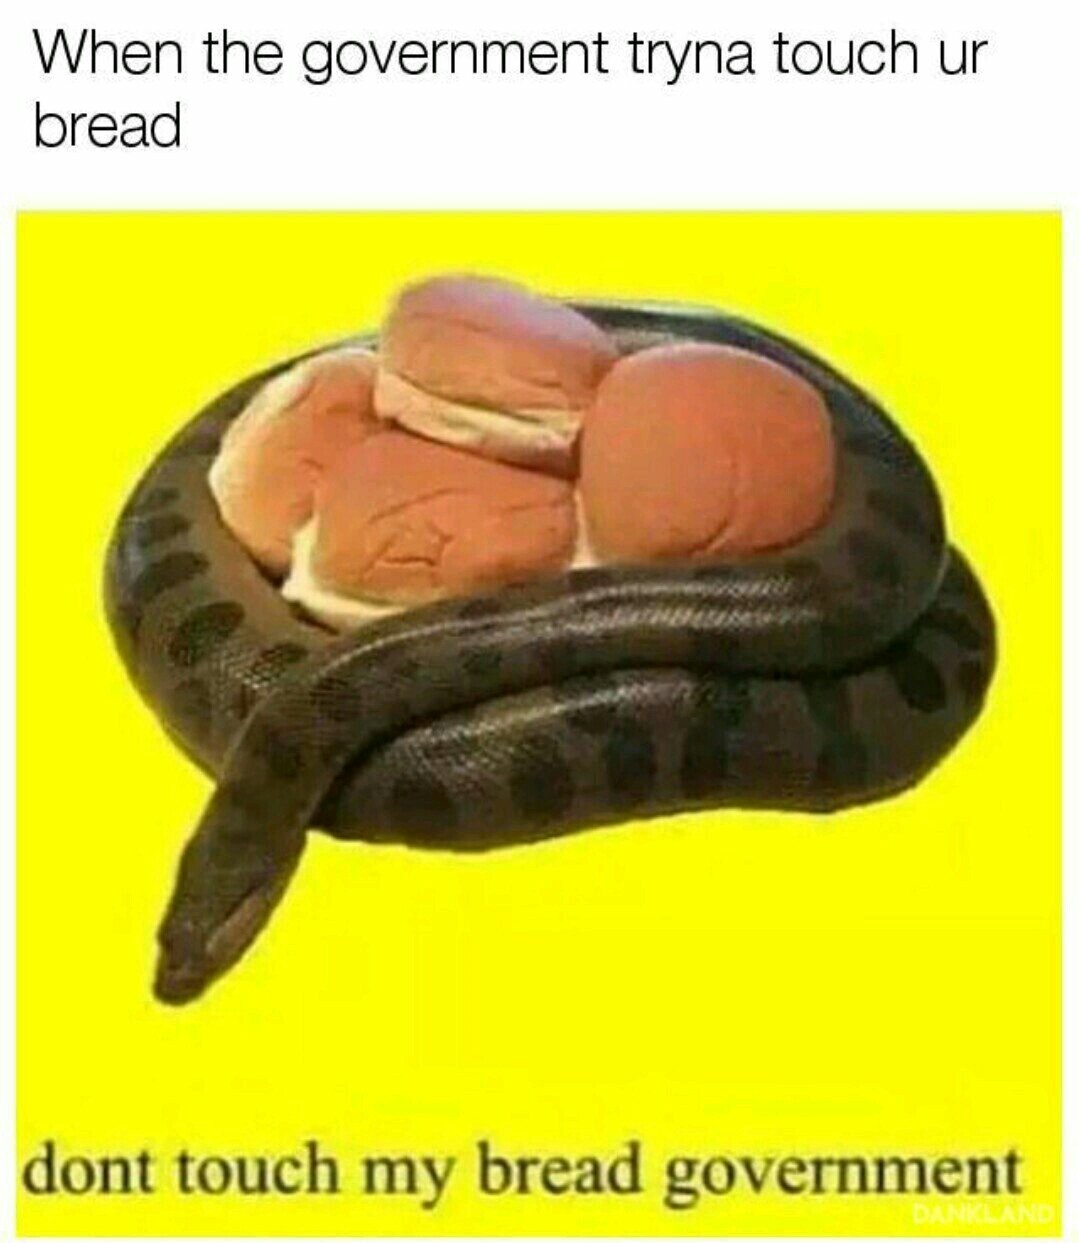 My bread is privatized - meme